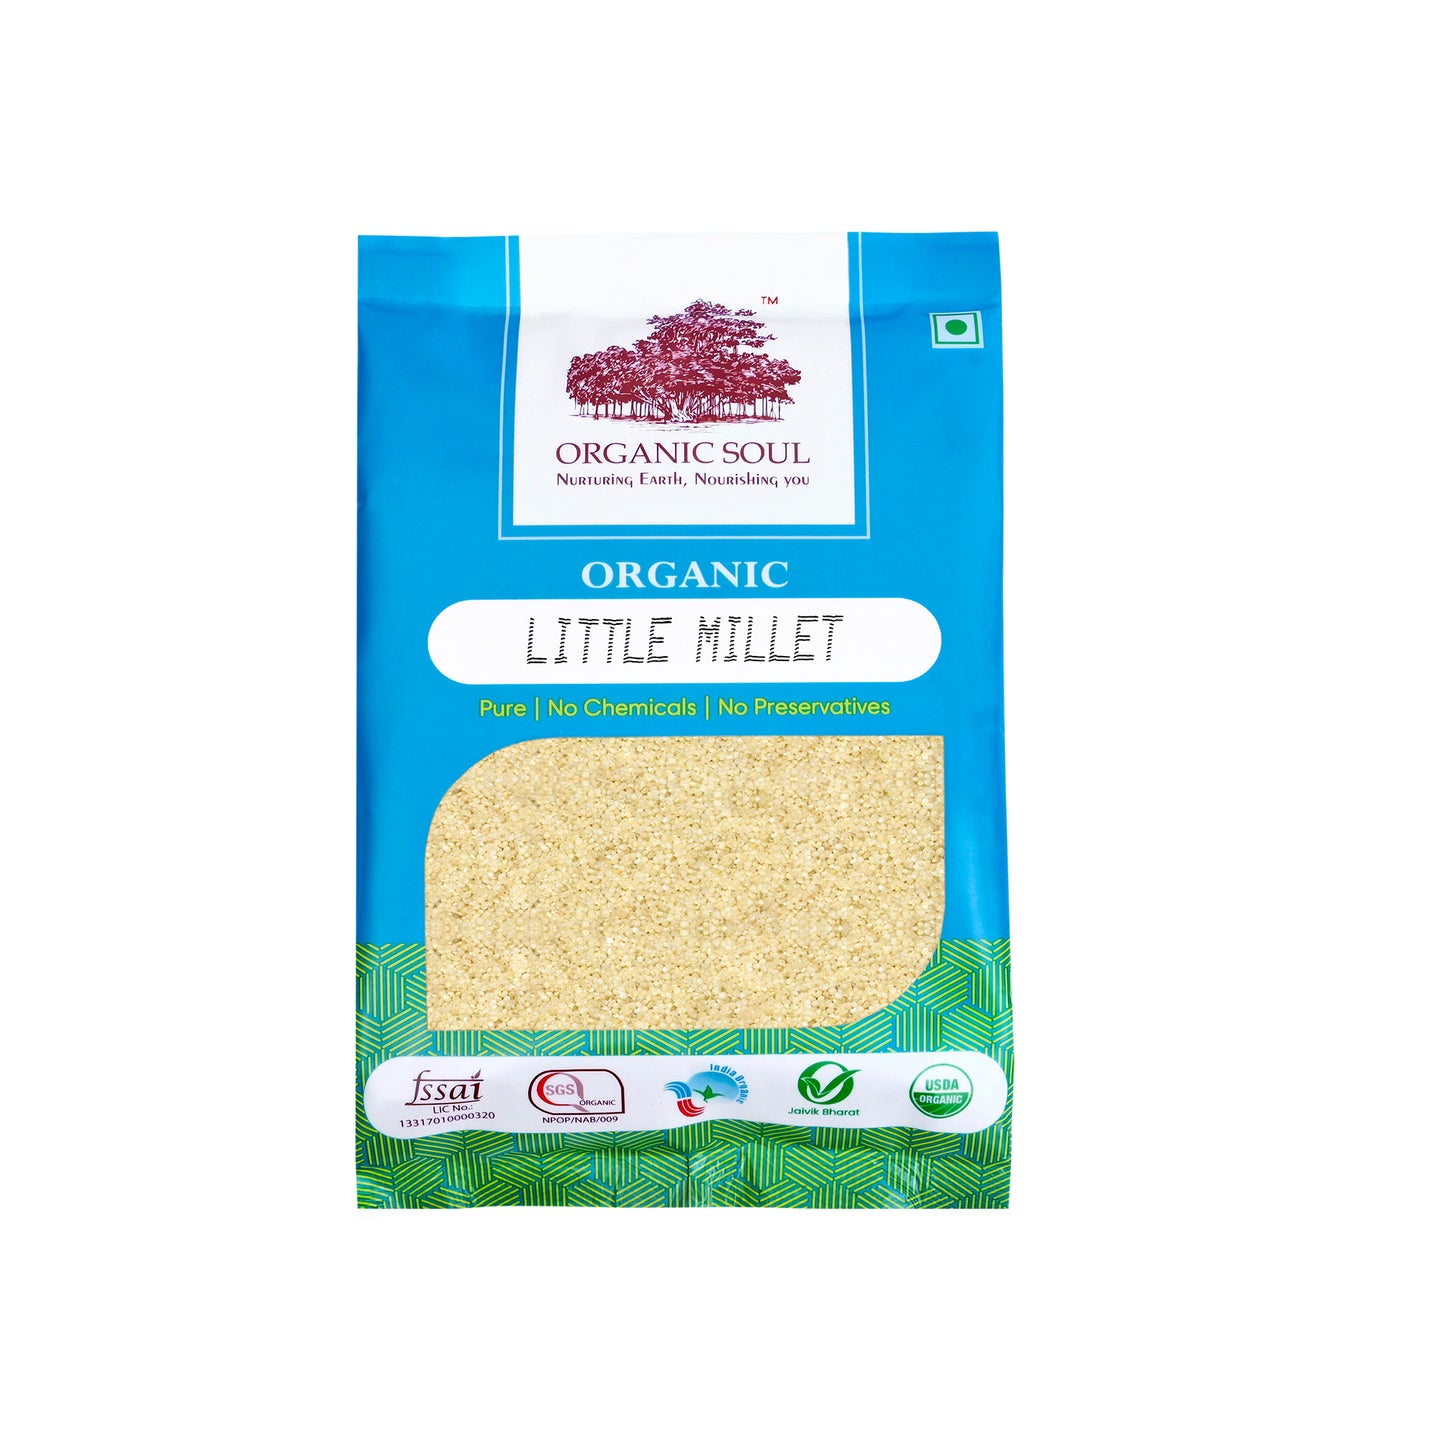 Organic Soul - Organic Little Millet -  (450 Gm Or 900 Gm)| 100% Organic